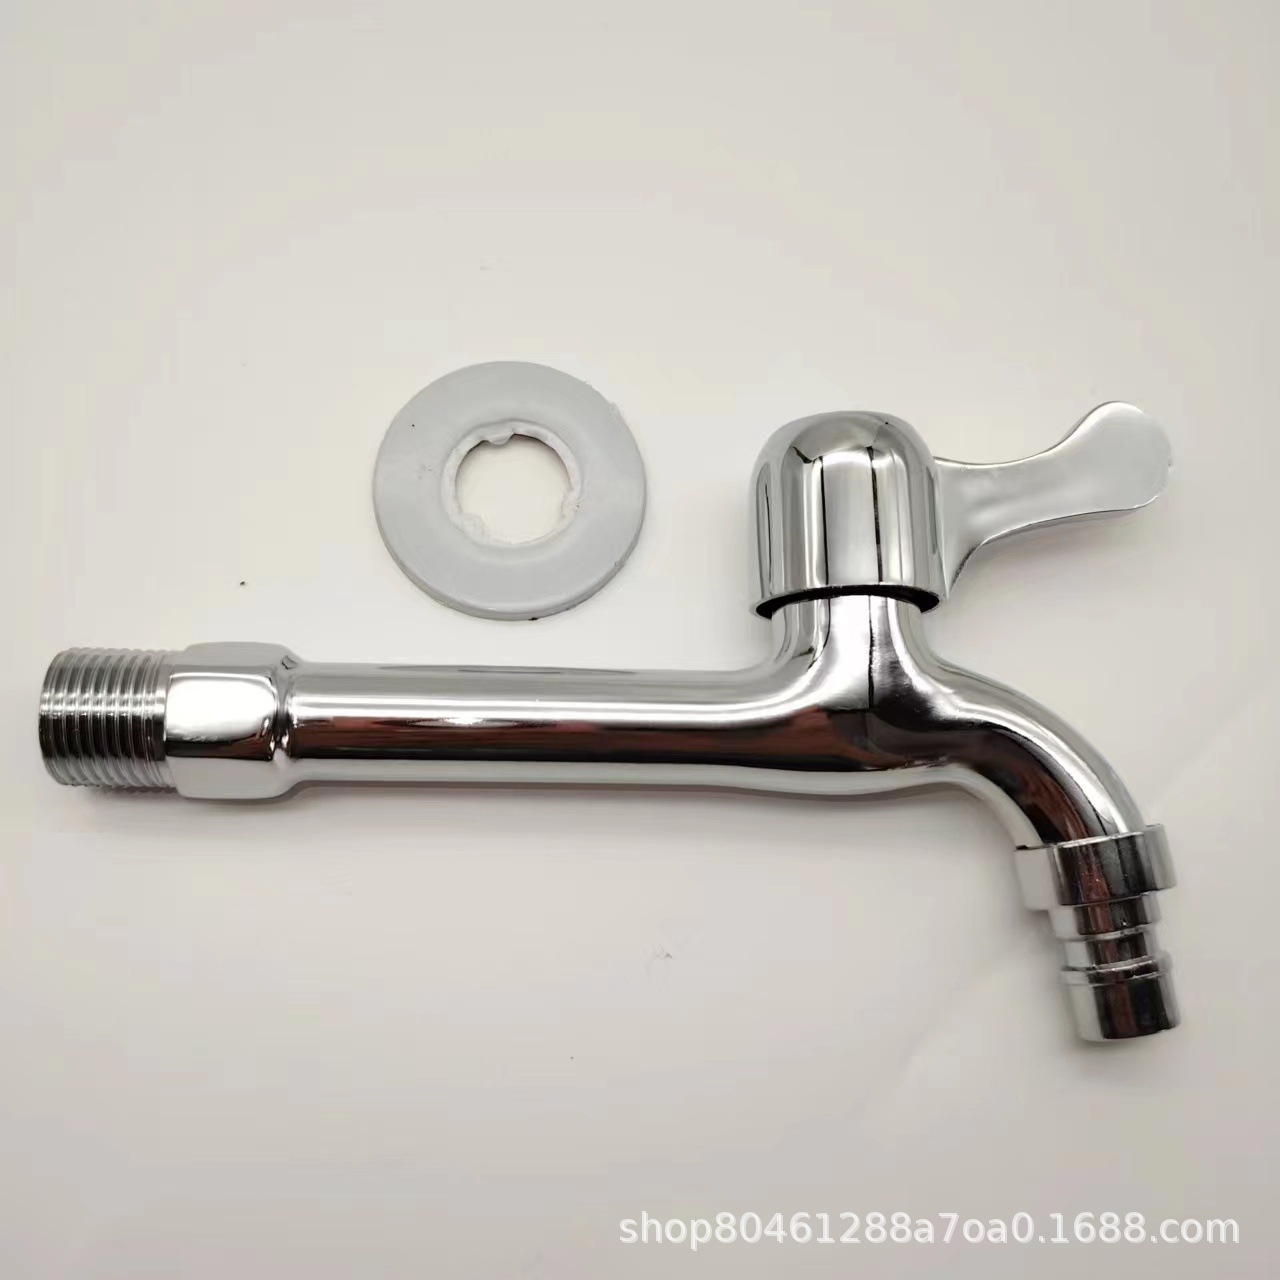 Factory Self-Sold 17cm Lengthened Faucet Quick Opening Faucet Washing Machine Mop Pool Tap Bibcock Water Tap